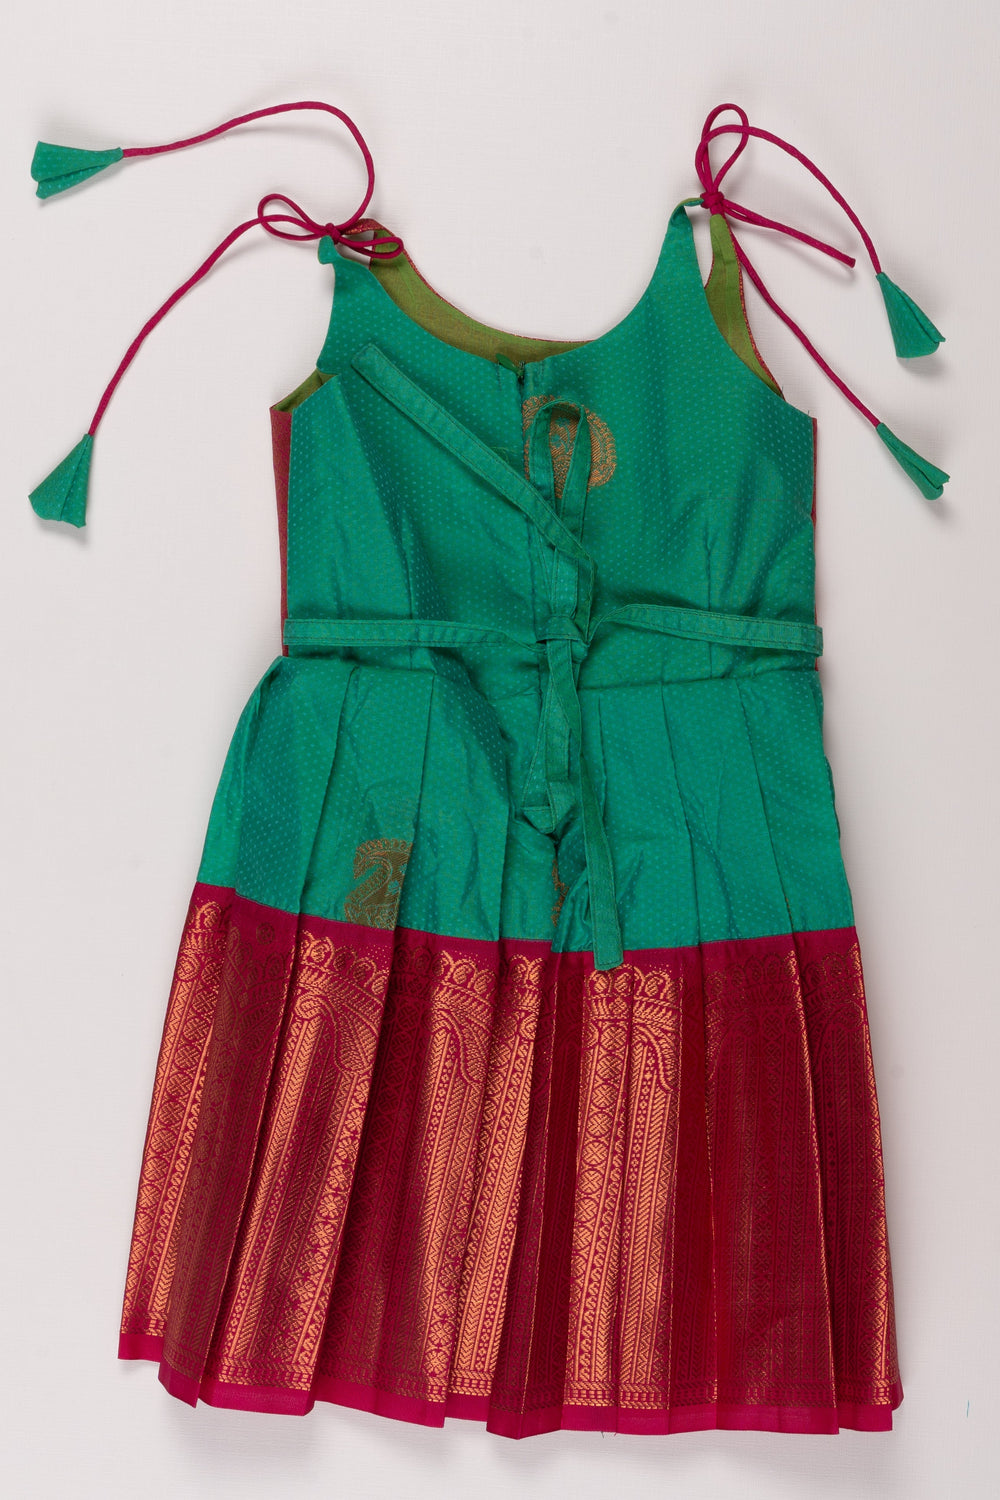 The Nesavu Tie Up Frock Vibrant Green & Magenta Silk Party Dress - Exquisite Brocade Design Nesavu Green and Magenta Silk Dress | Luxurious Brocade Evening Wear | The Nesavu